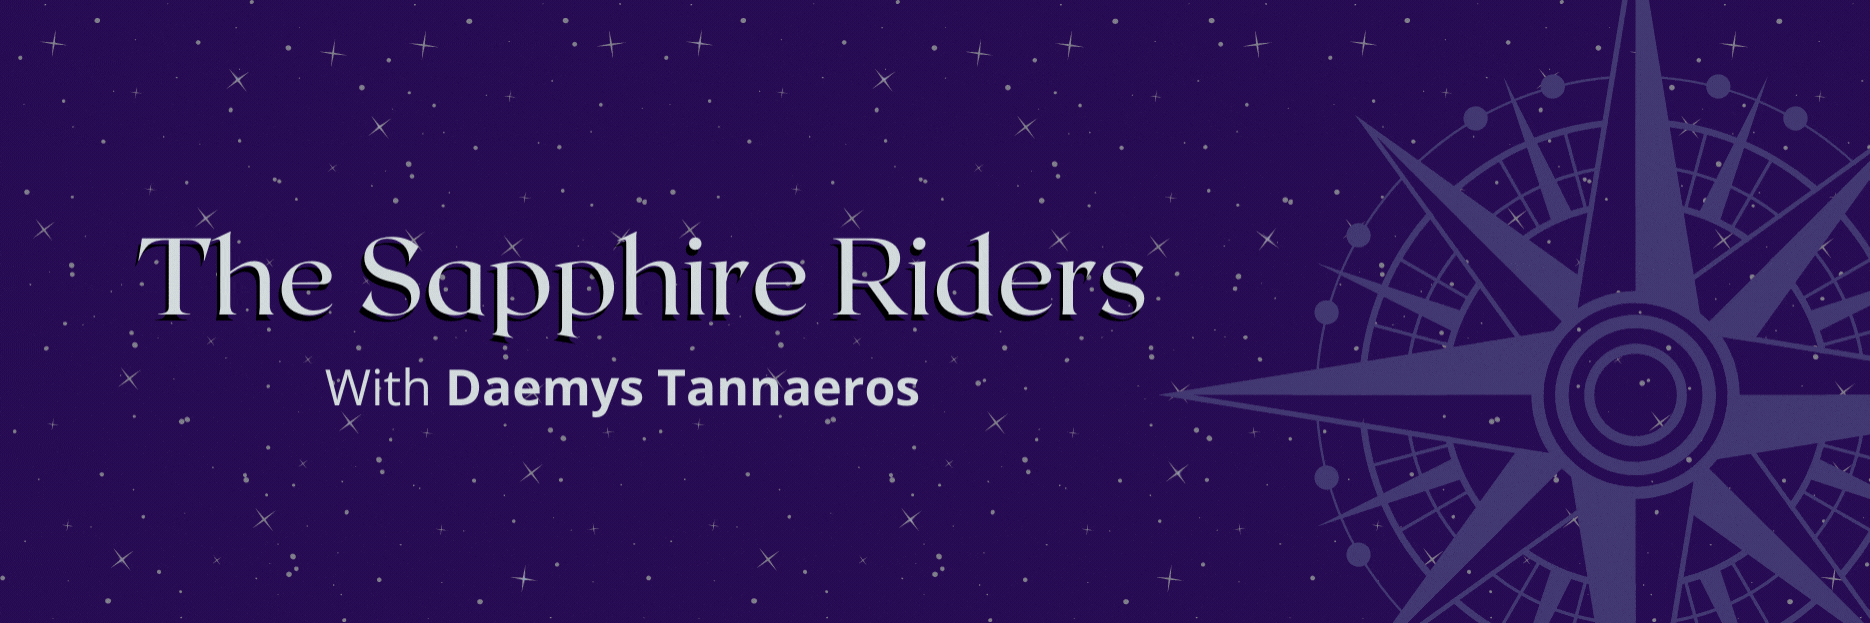 The Sapphire Riders #4